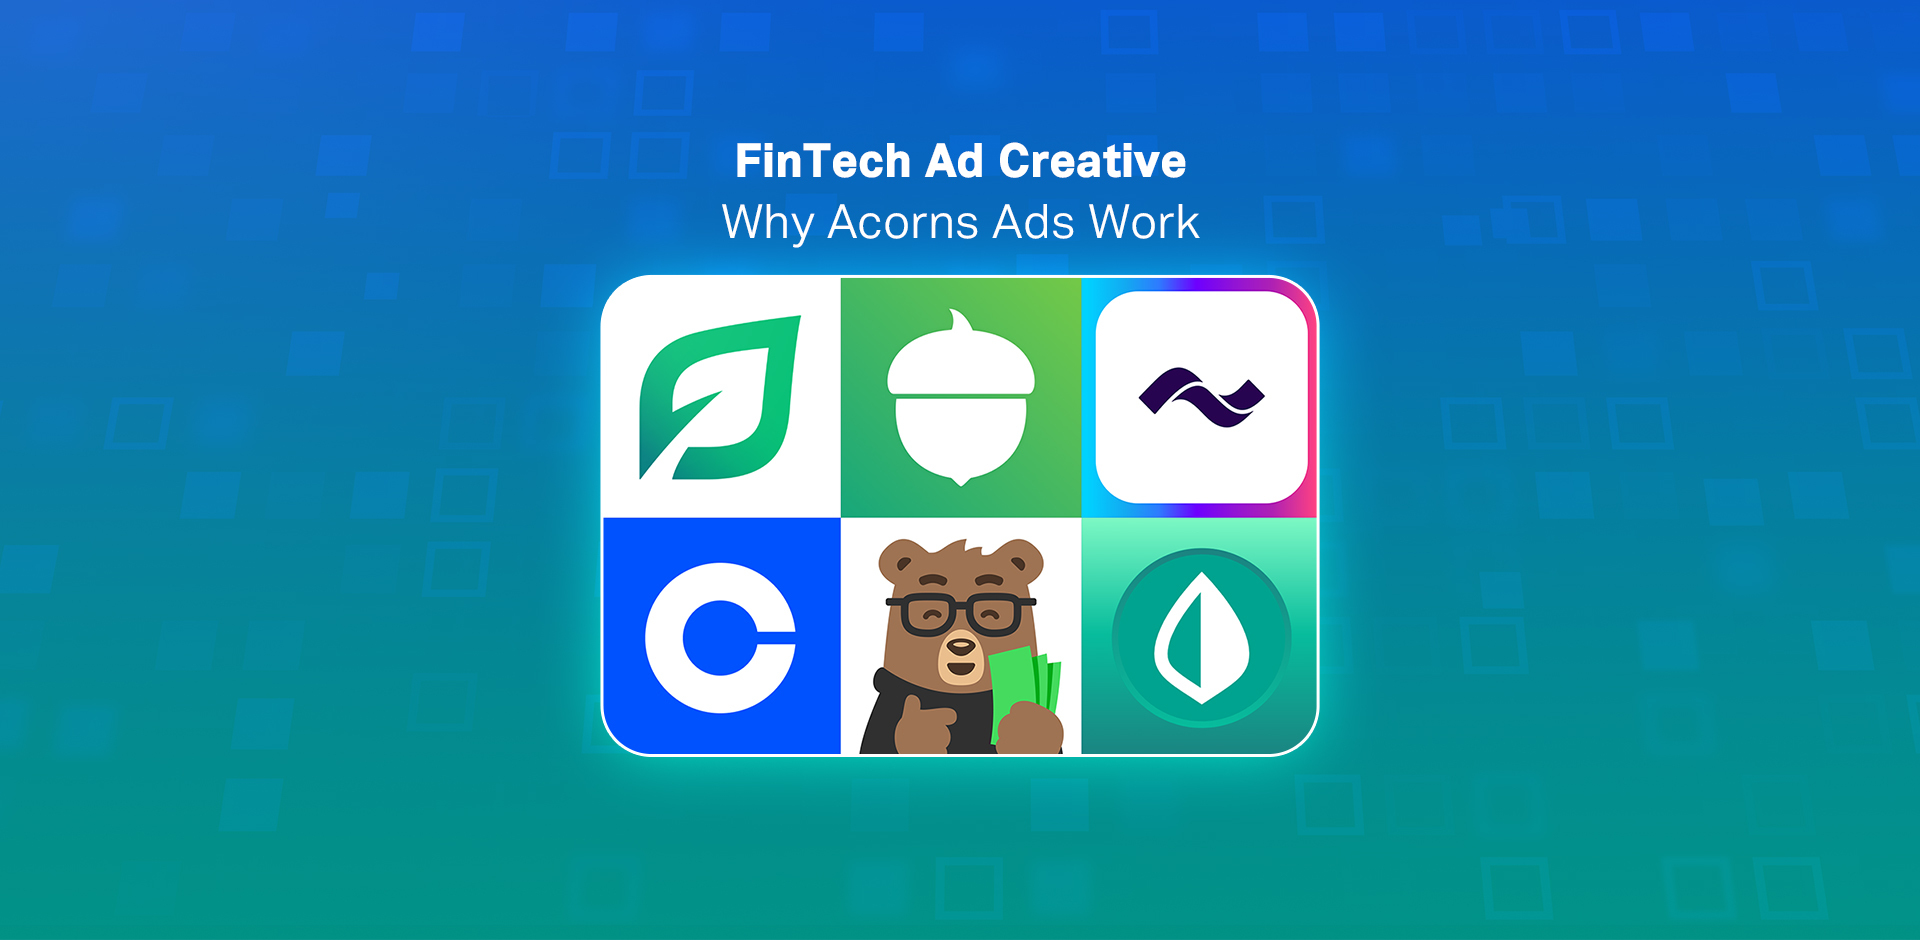 FinTech Ad Creative: Why Acorns Ads Work